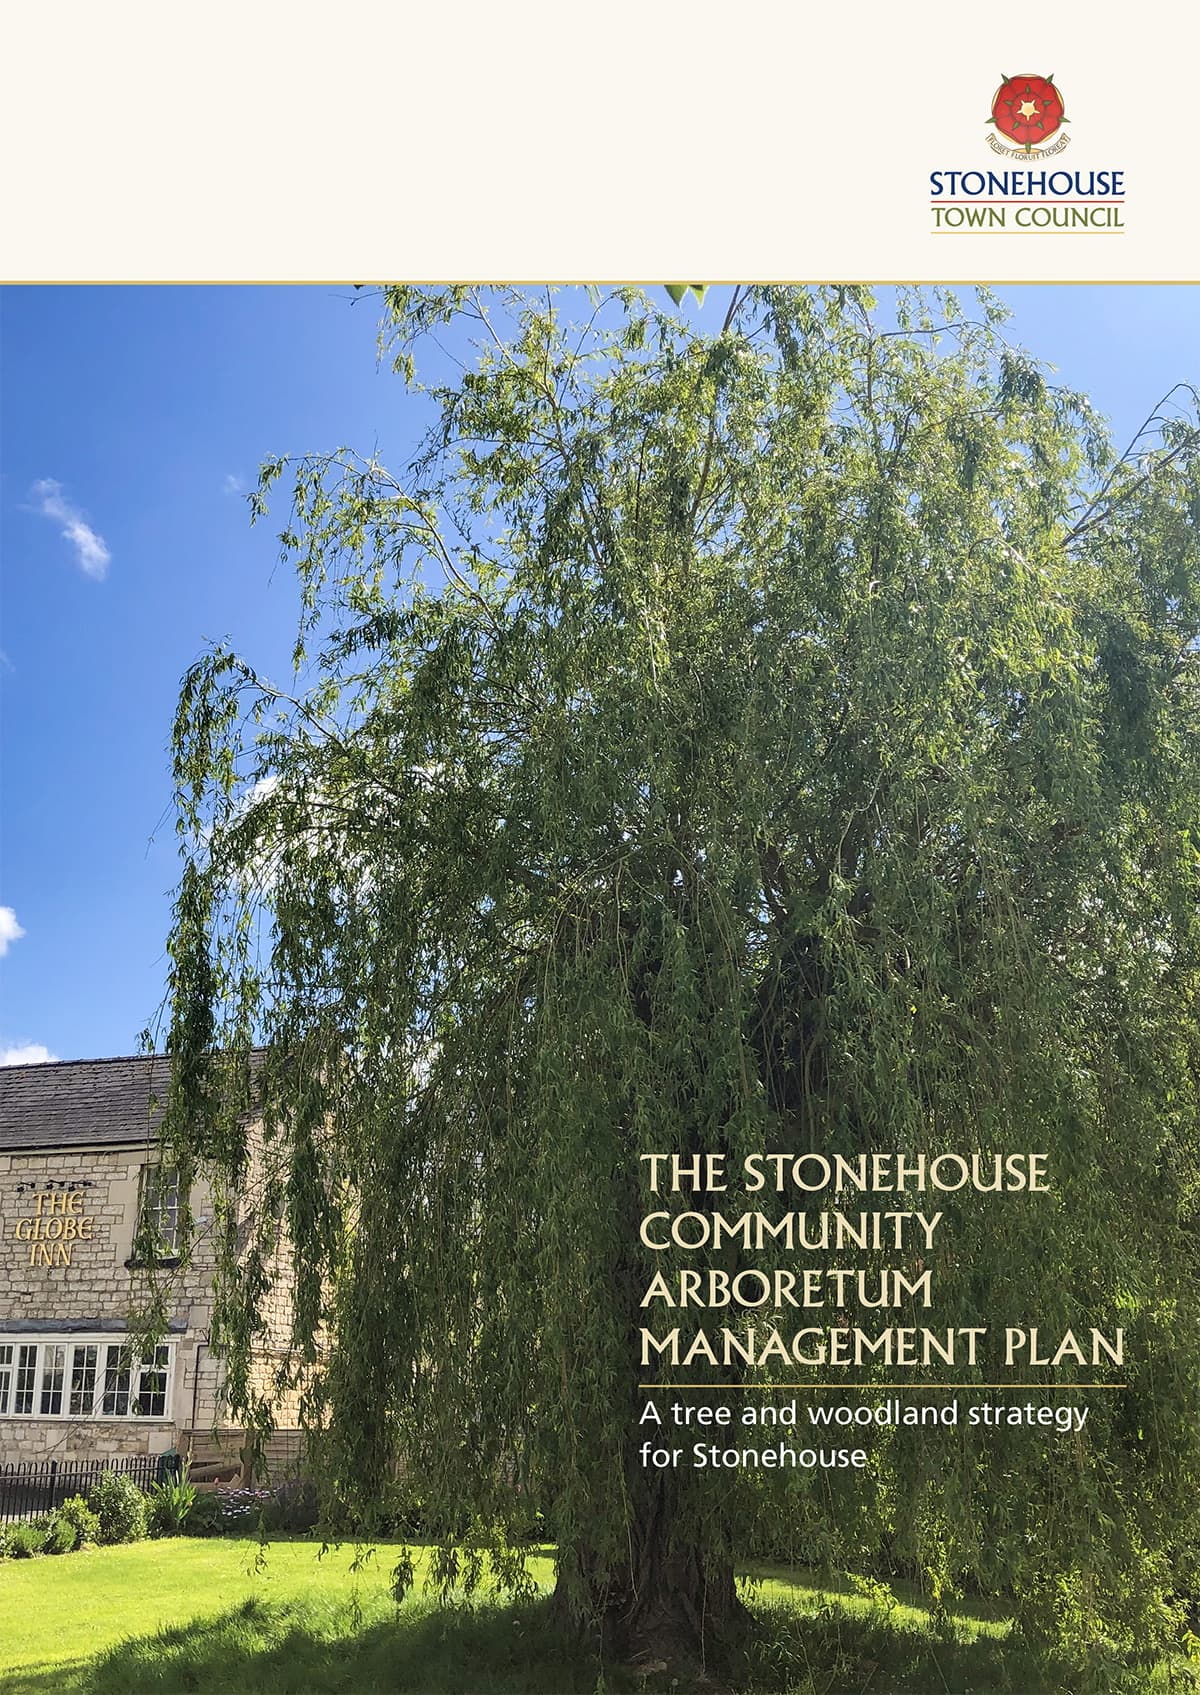 The Stonehouse Arboretum Management Plan